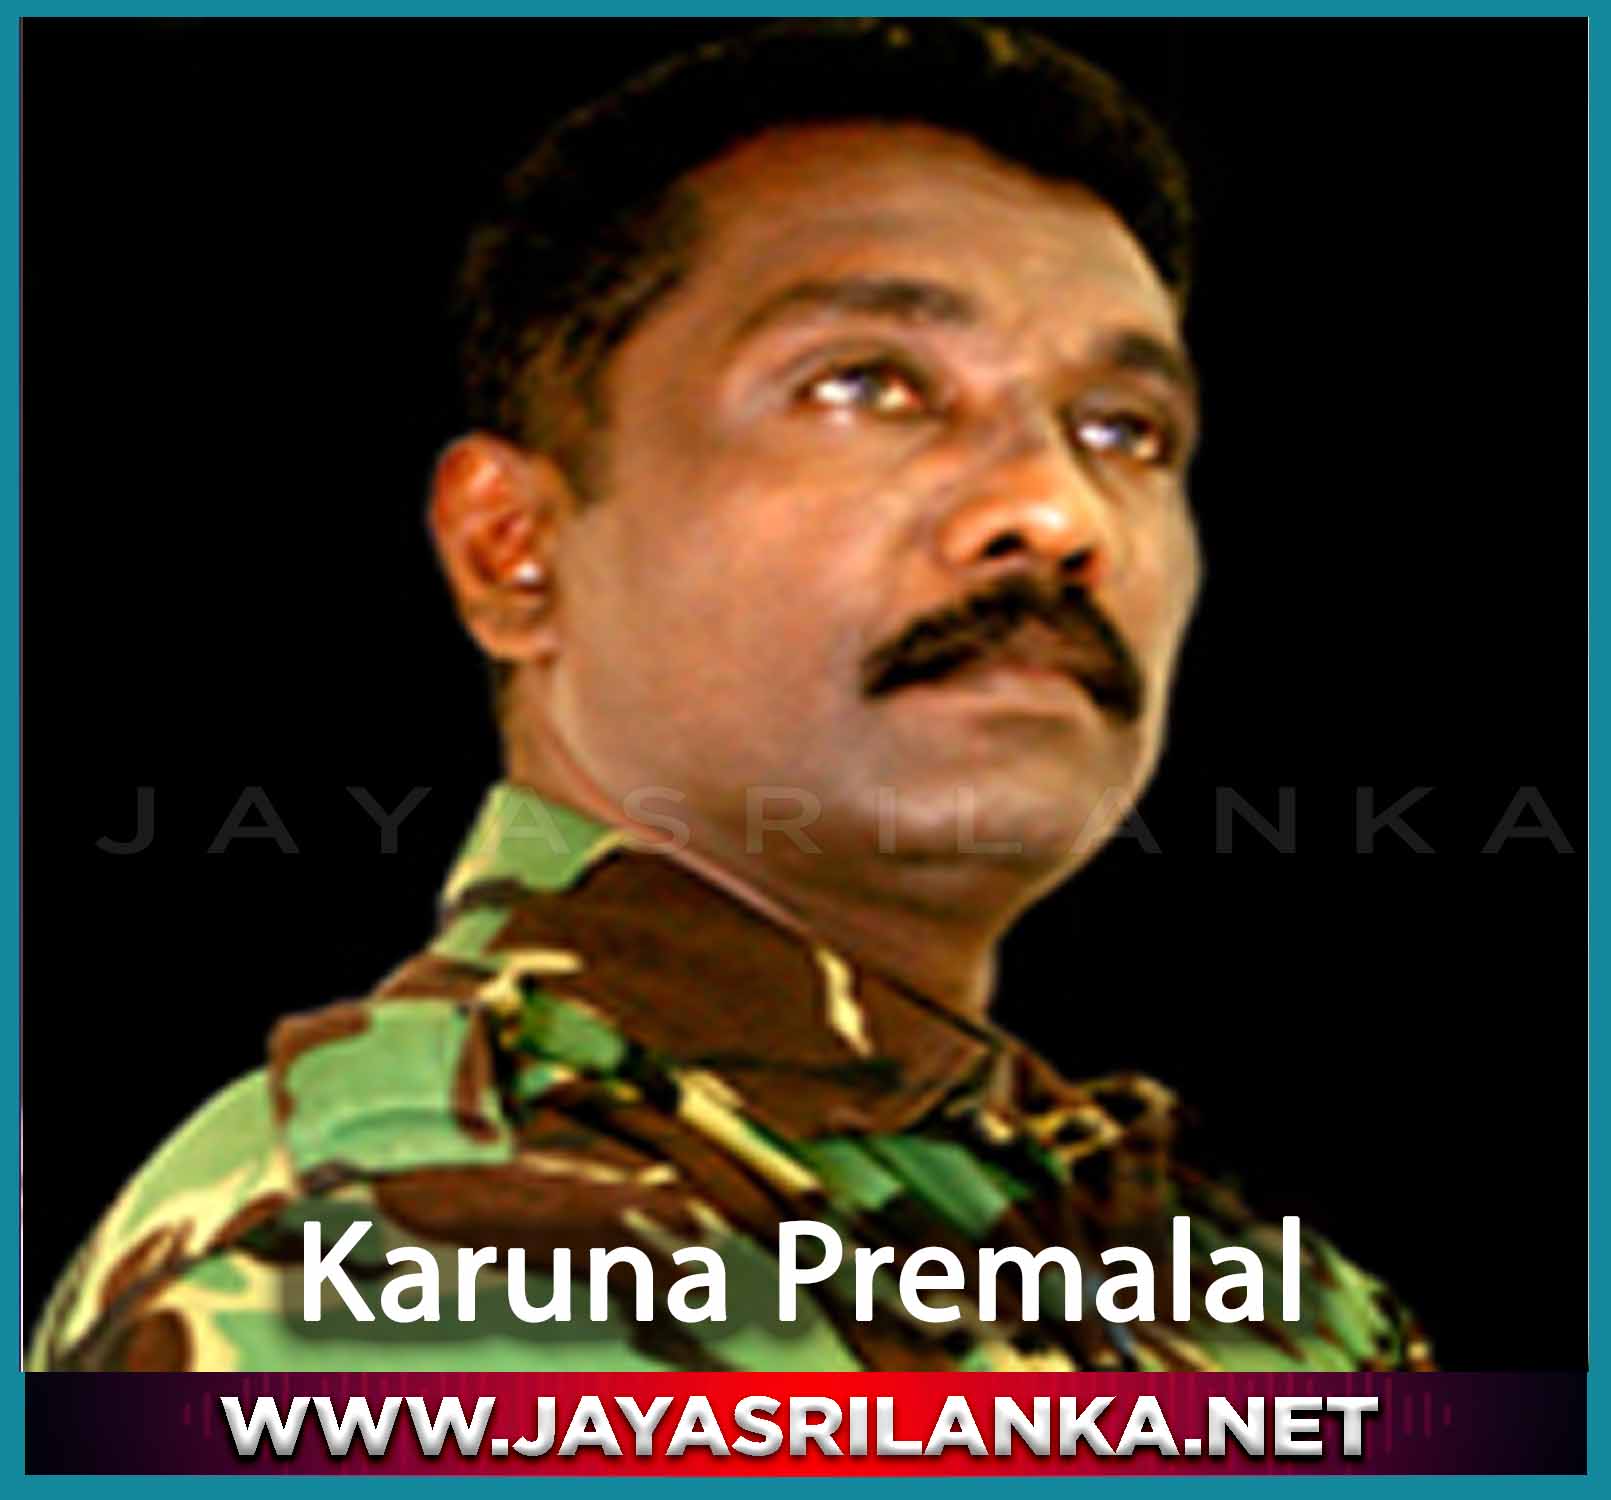 Sandun Mal Kadalle - Karuna Premalal mp3 Image